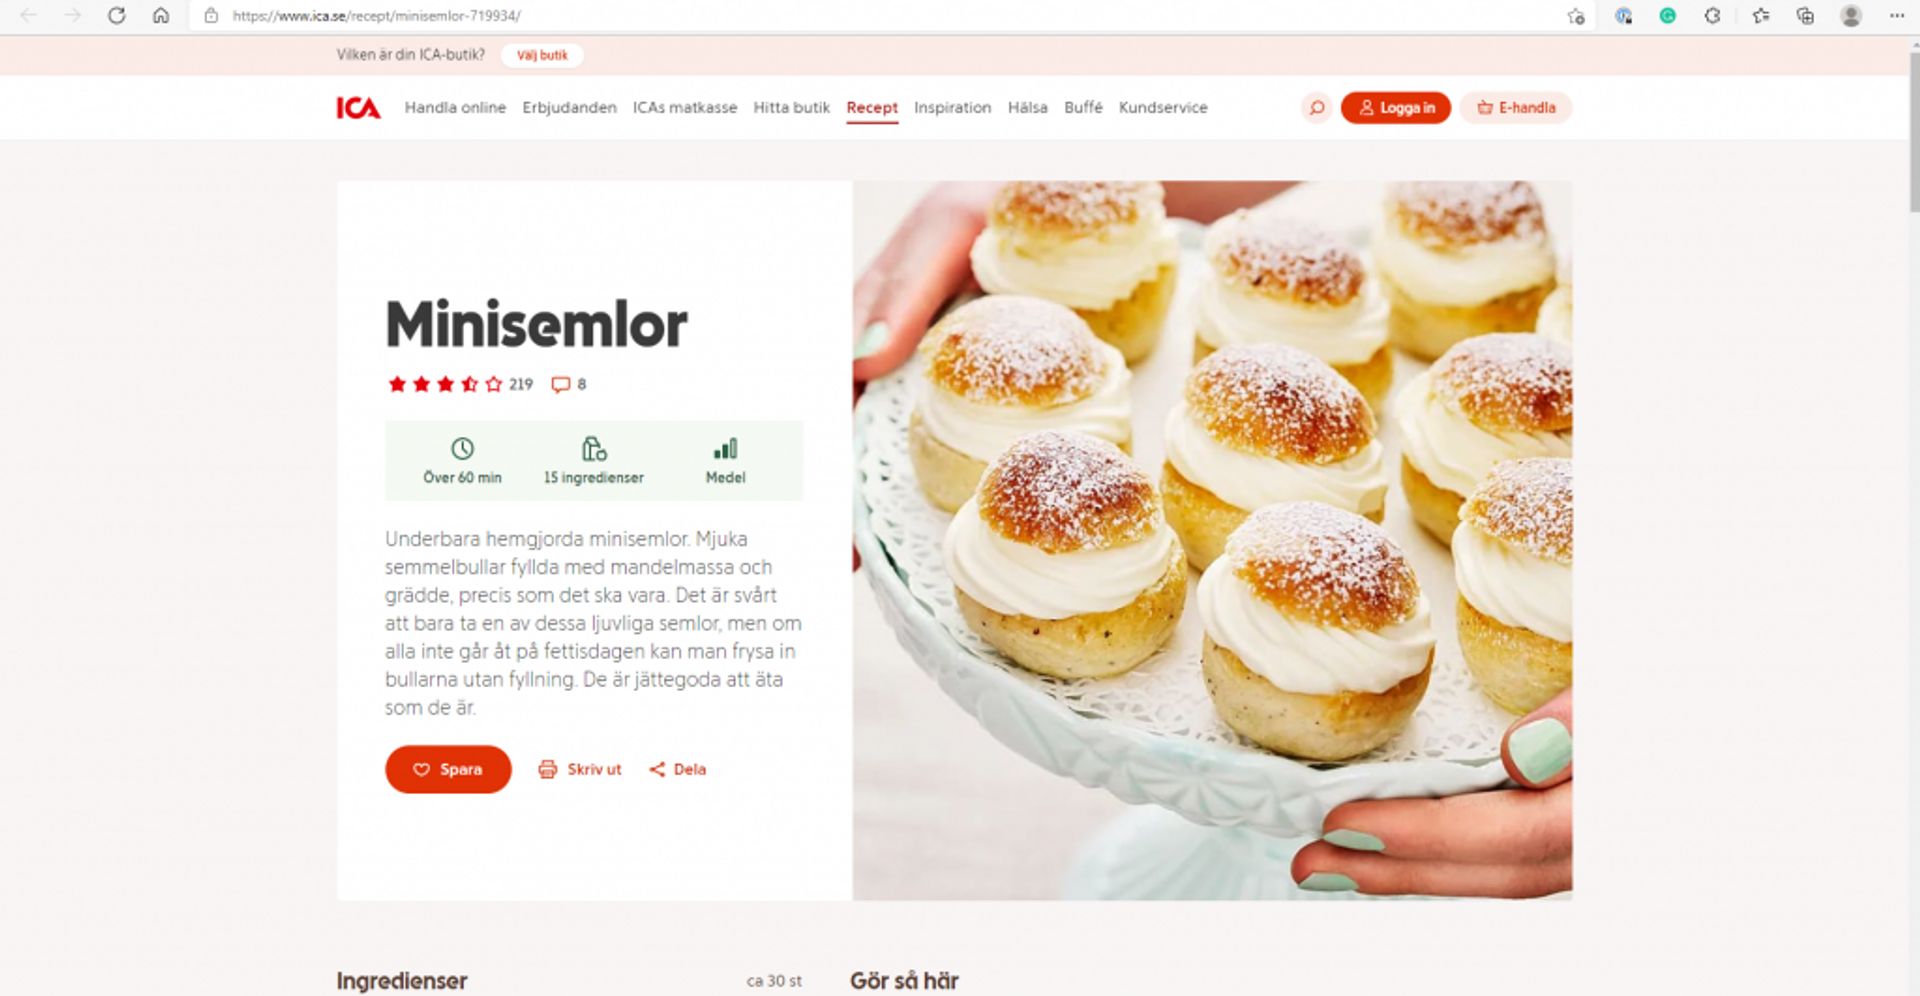 Screenshot from ica.se of the recipe for mini cardamon buns (Mini-semlor in Swedish).